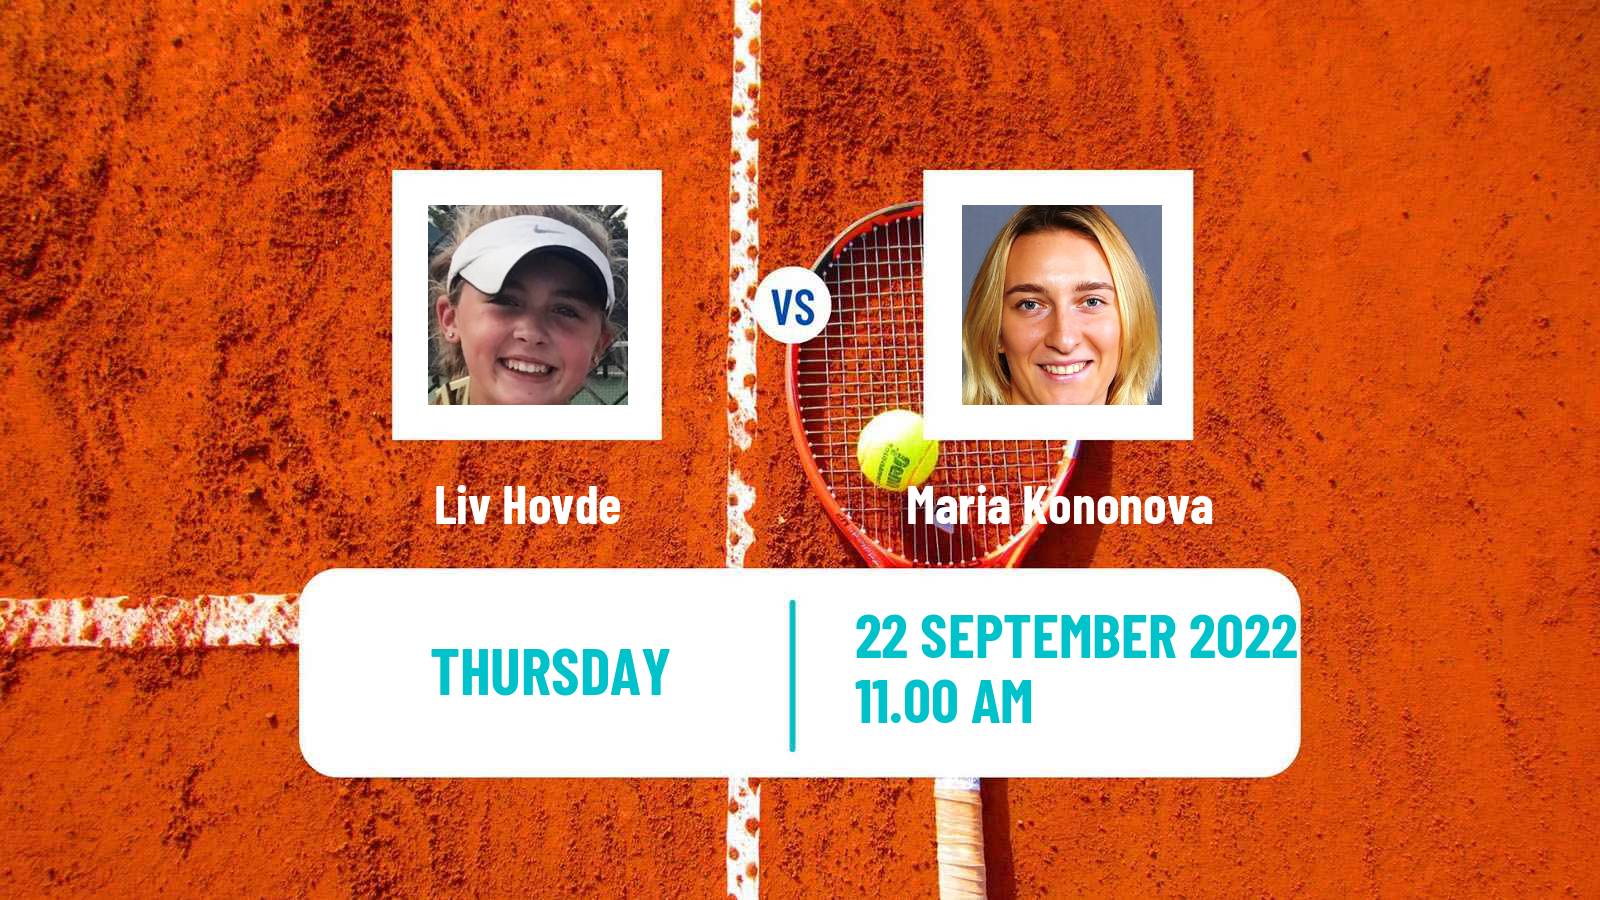 Tennis ITF Tournaments Liv Hovde - Maria Kononova